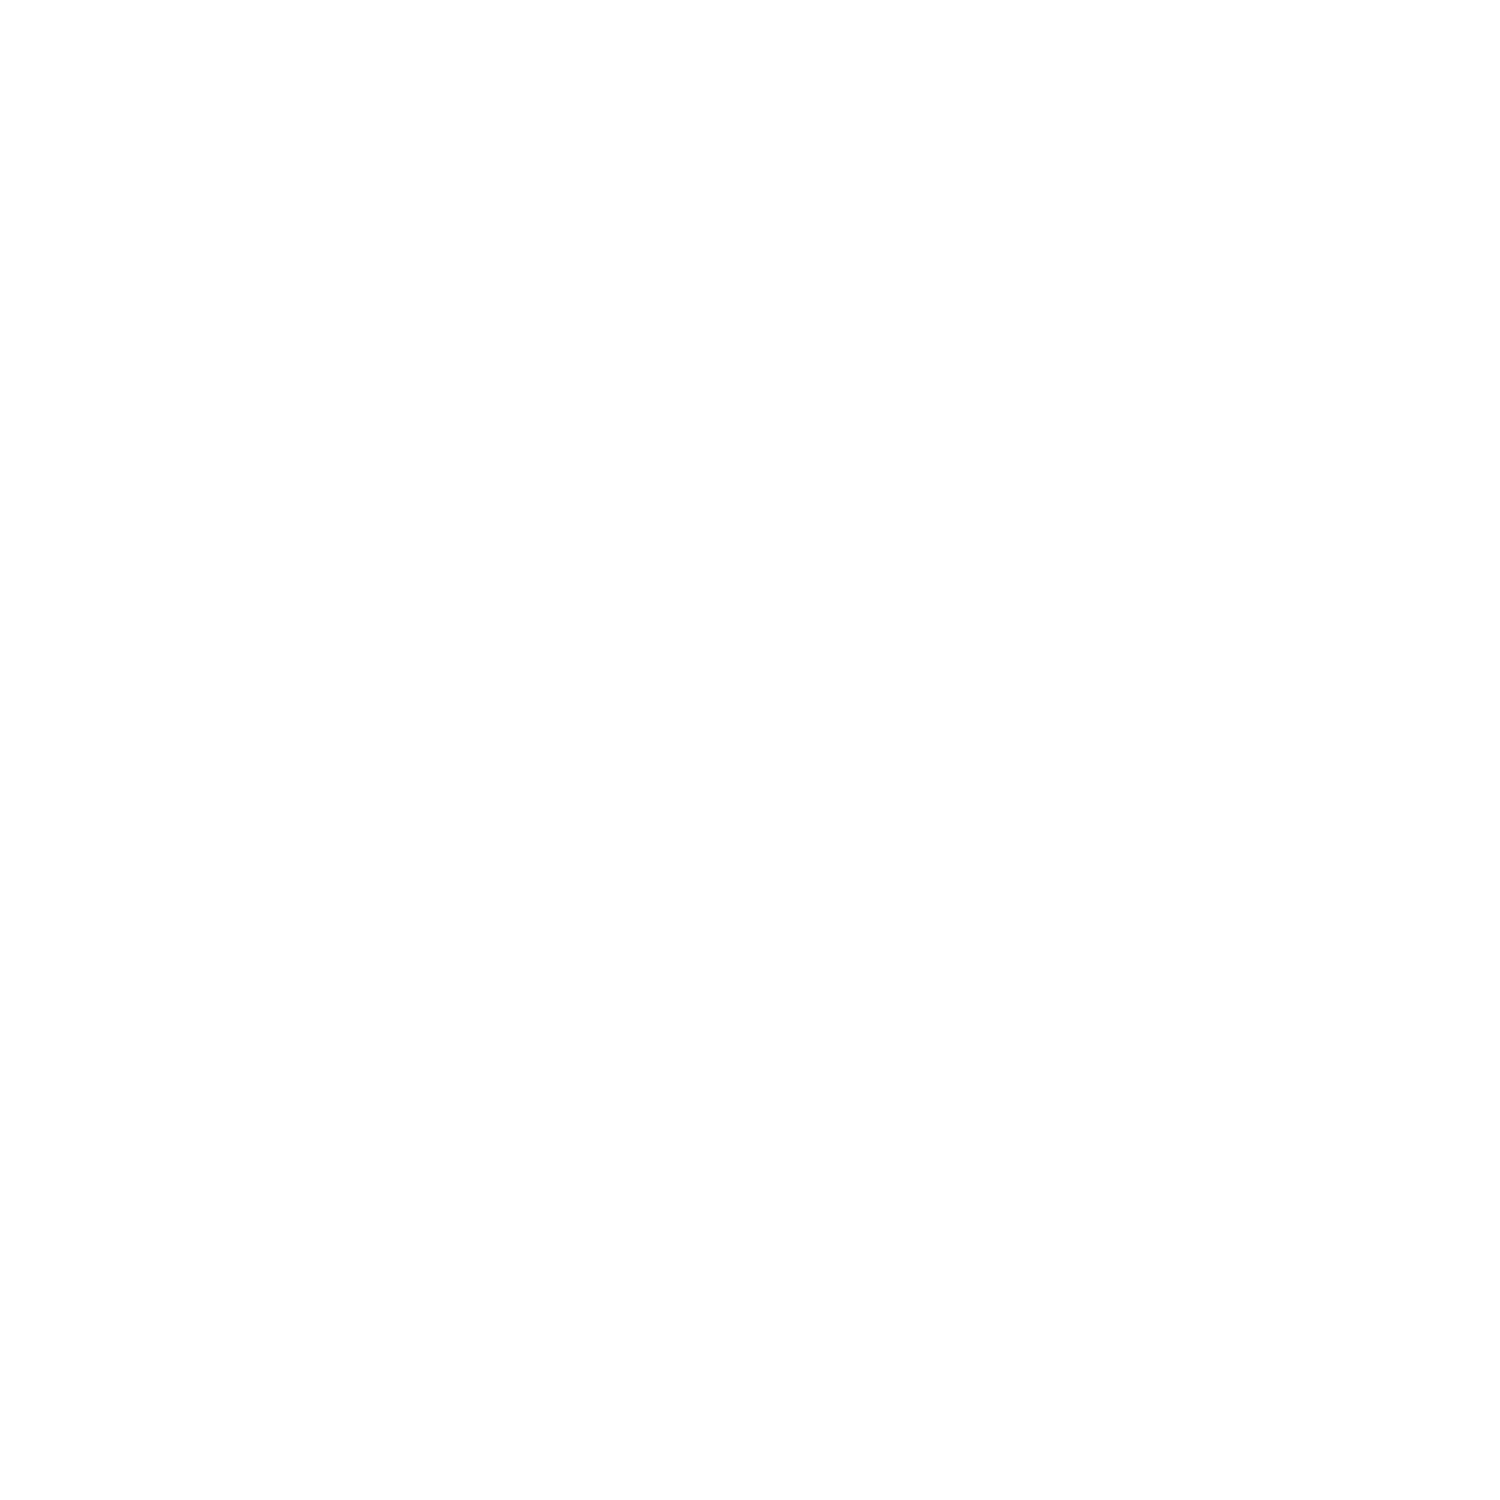 New Life Churches